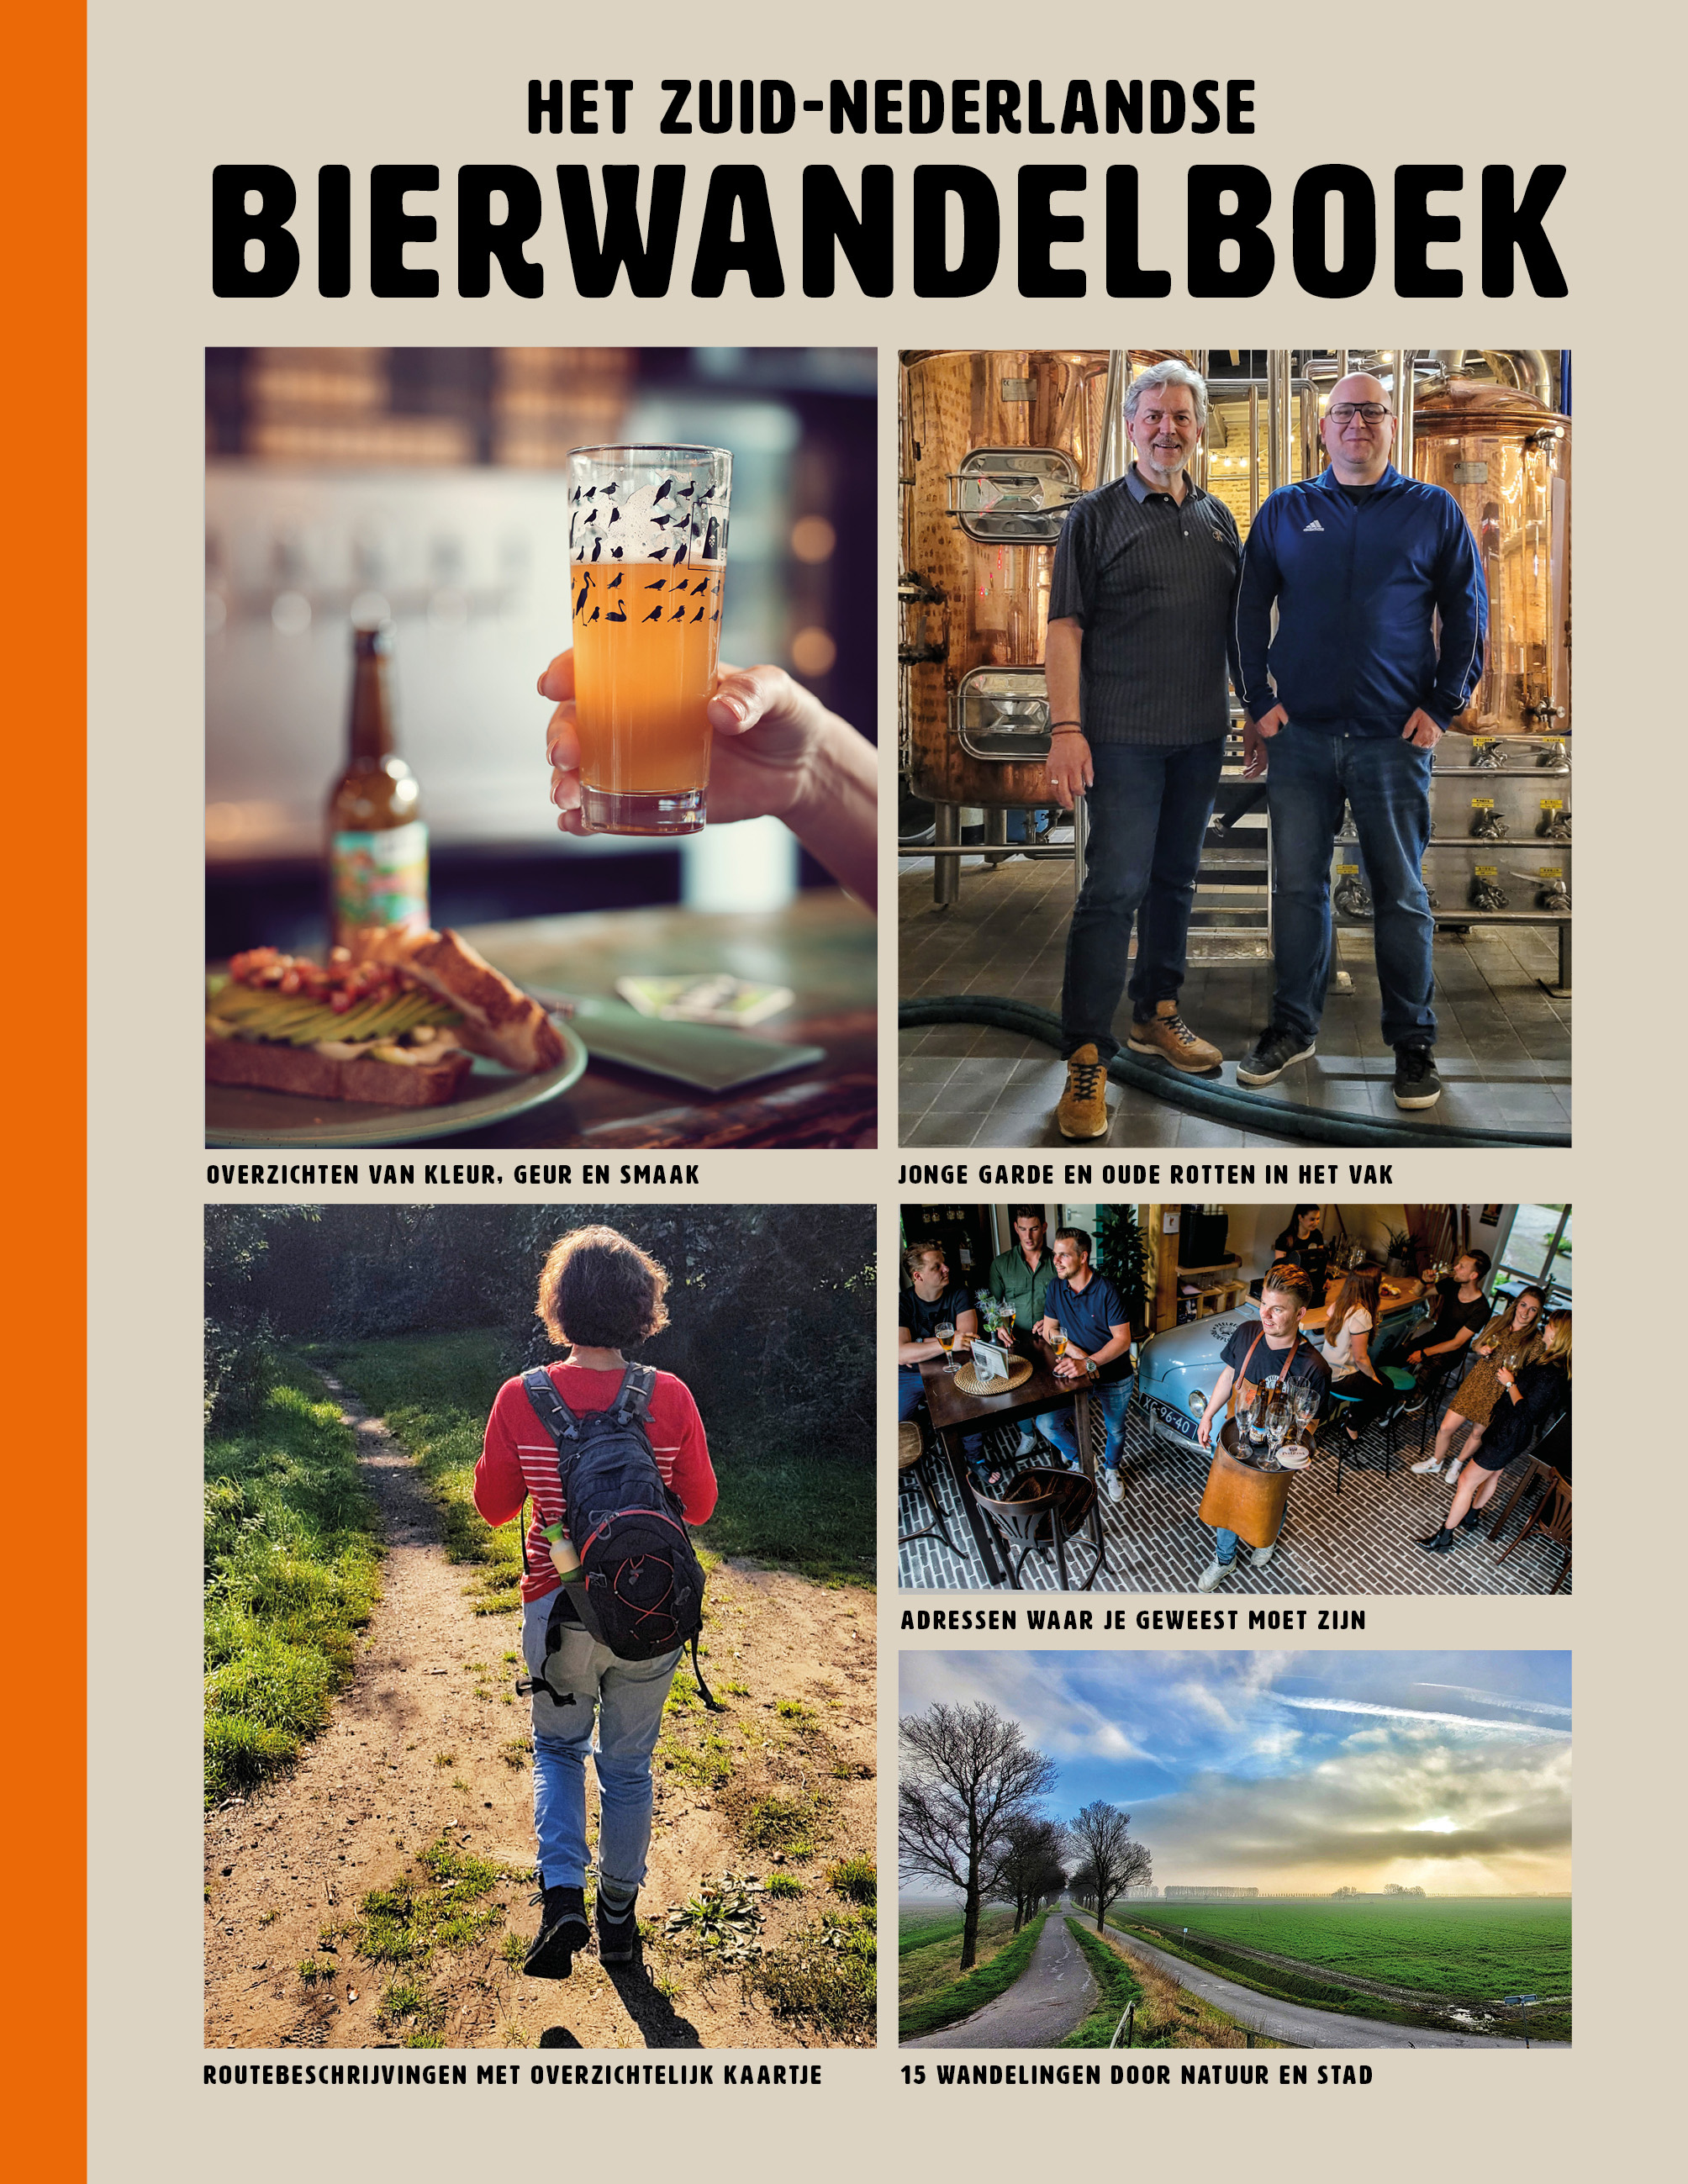 Het Zuid-Nederlandse Bierwandelboek (ANWB)